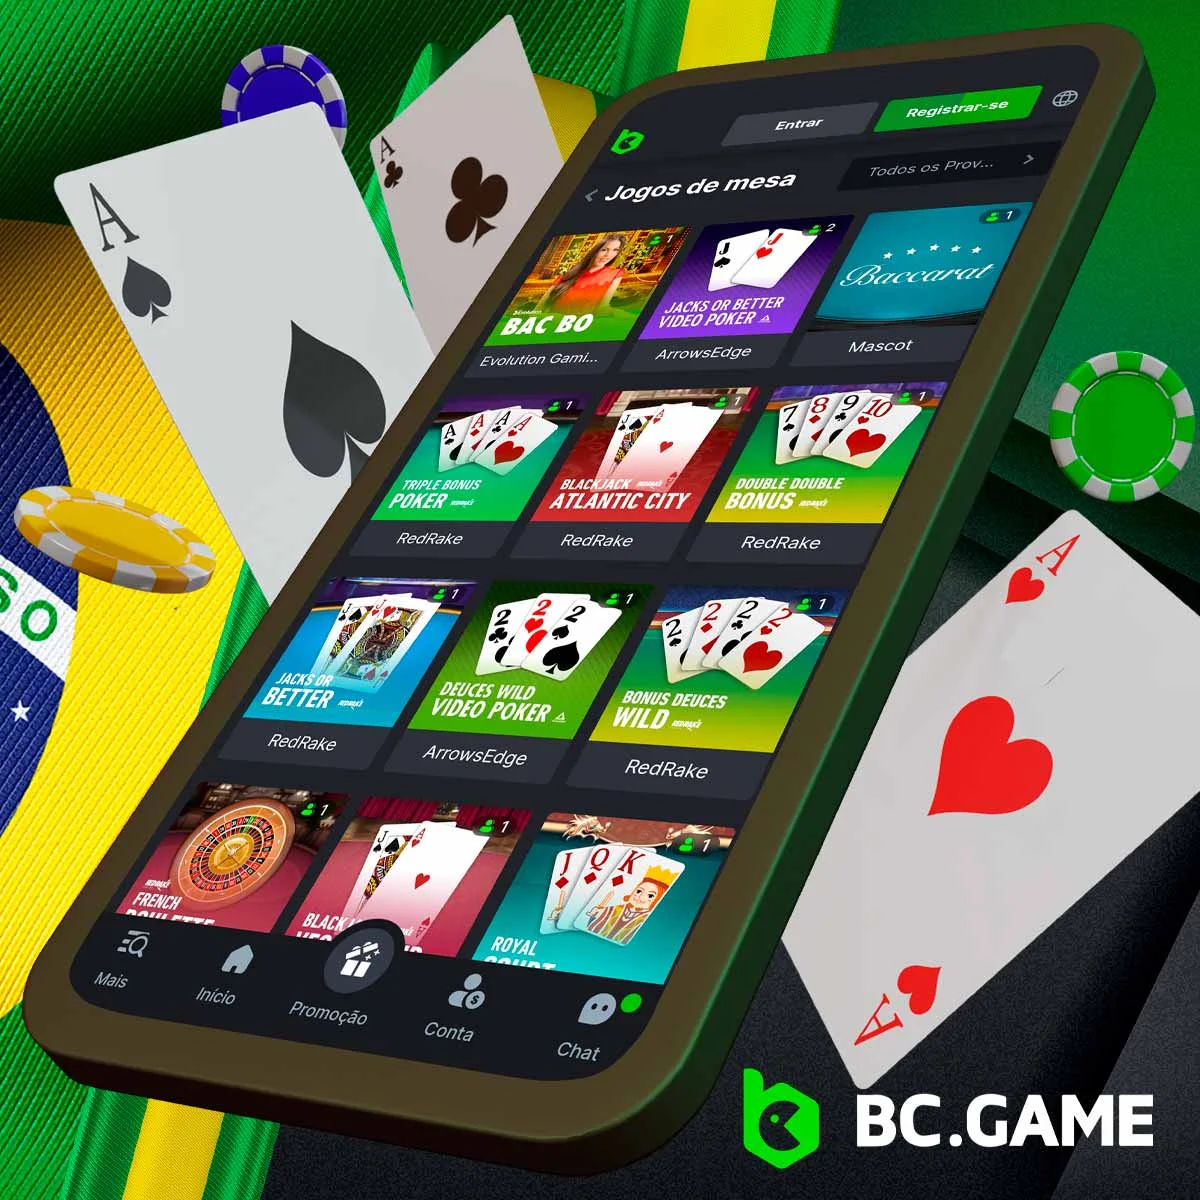 Como é que o poker funciona na plataforma BC Game?